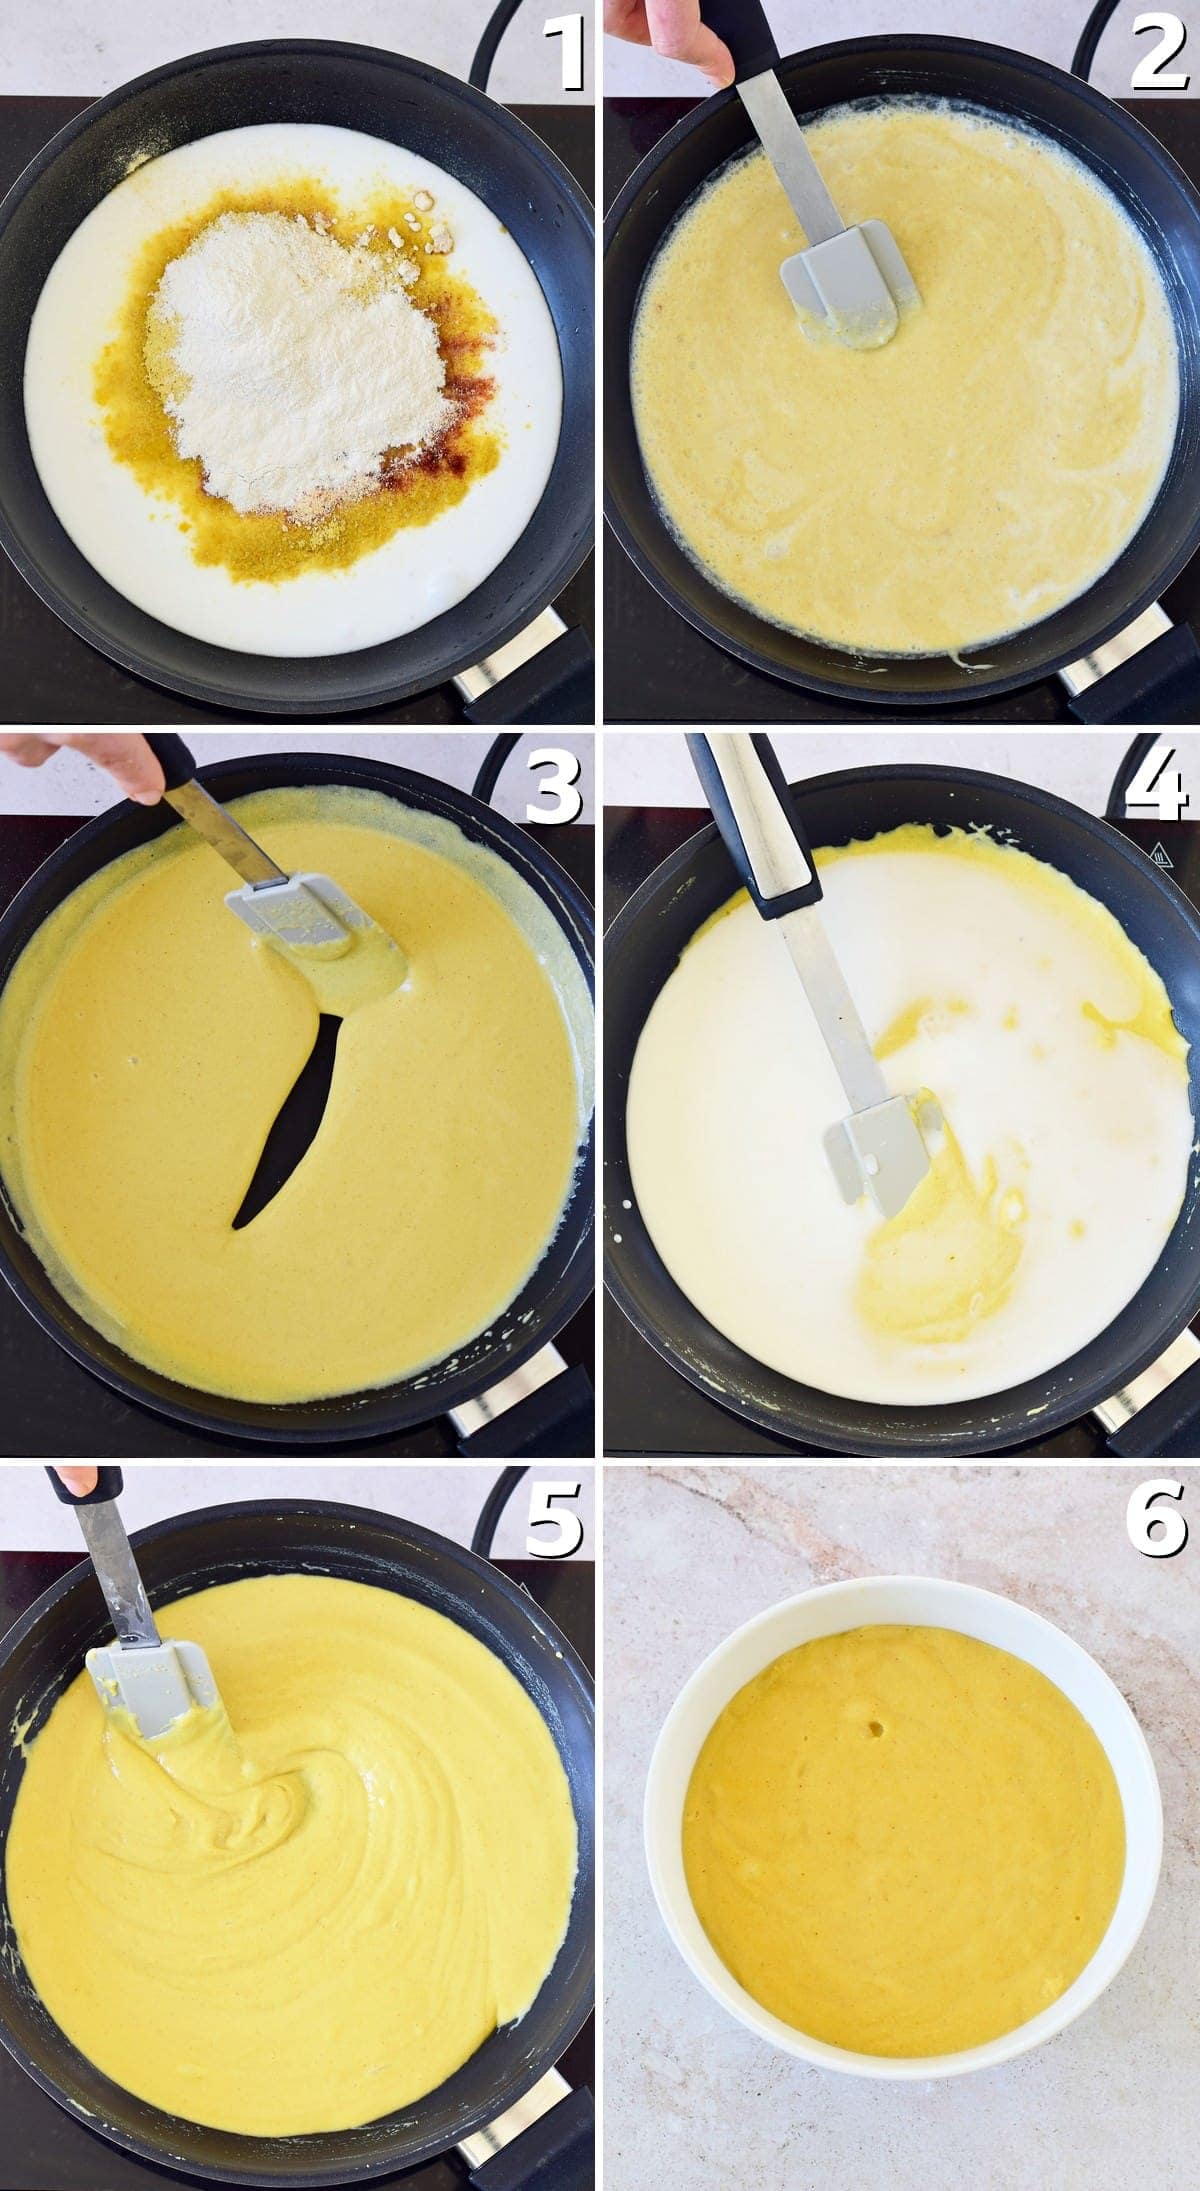 6 Schritt-für-Schritt-Fotos, wie man veganen Käse herstellt